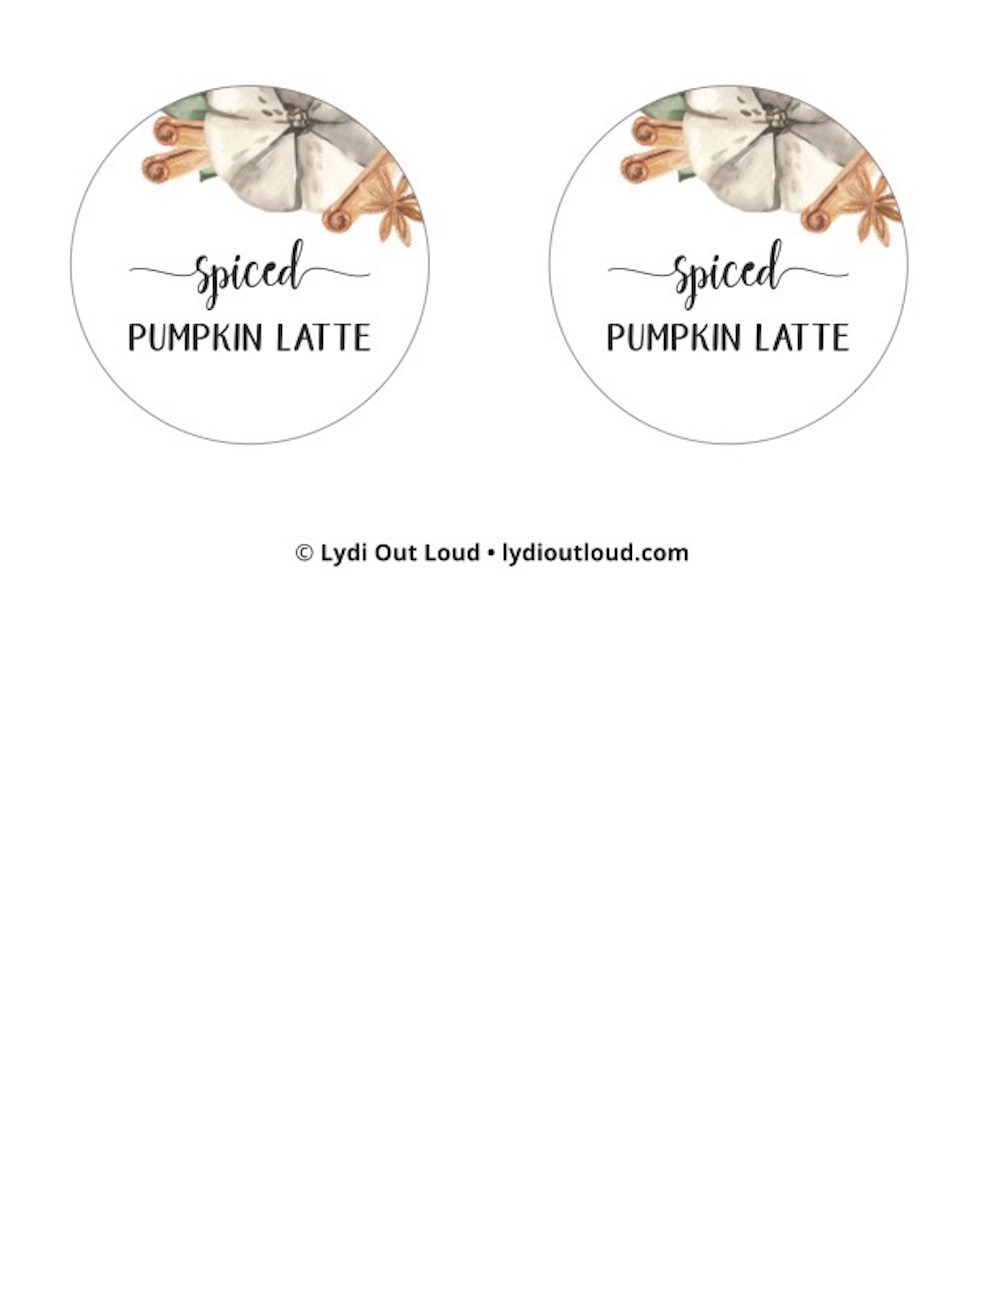 spiced pumpkin latte candle labels